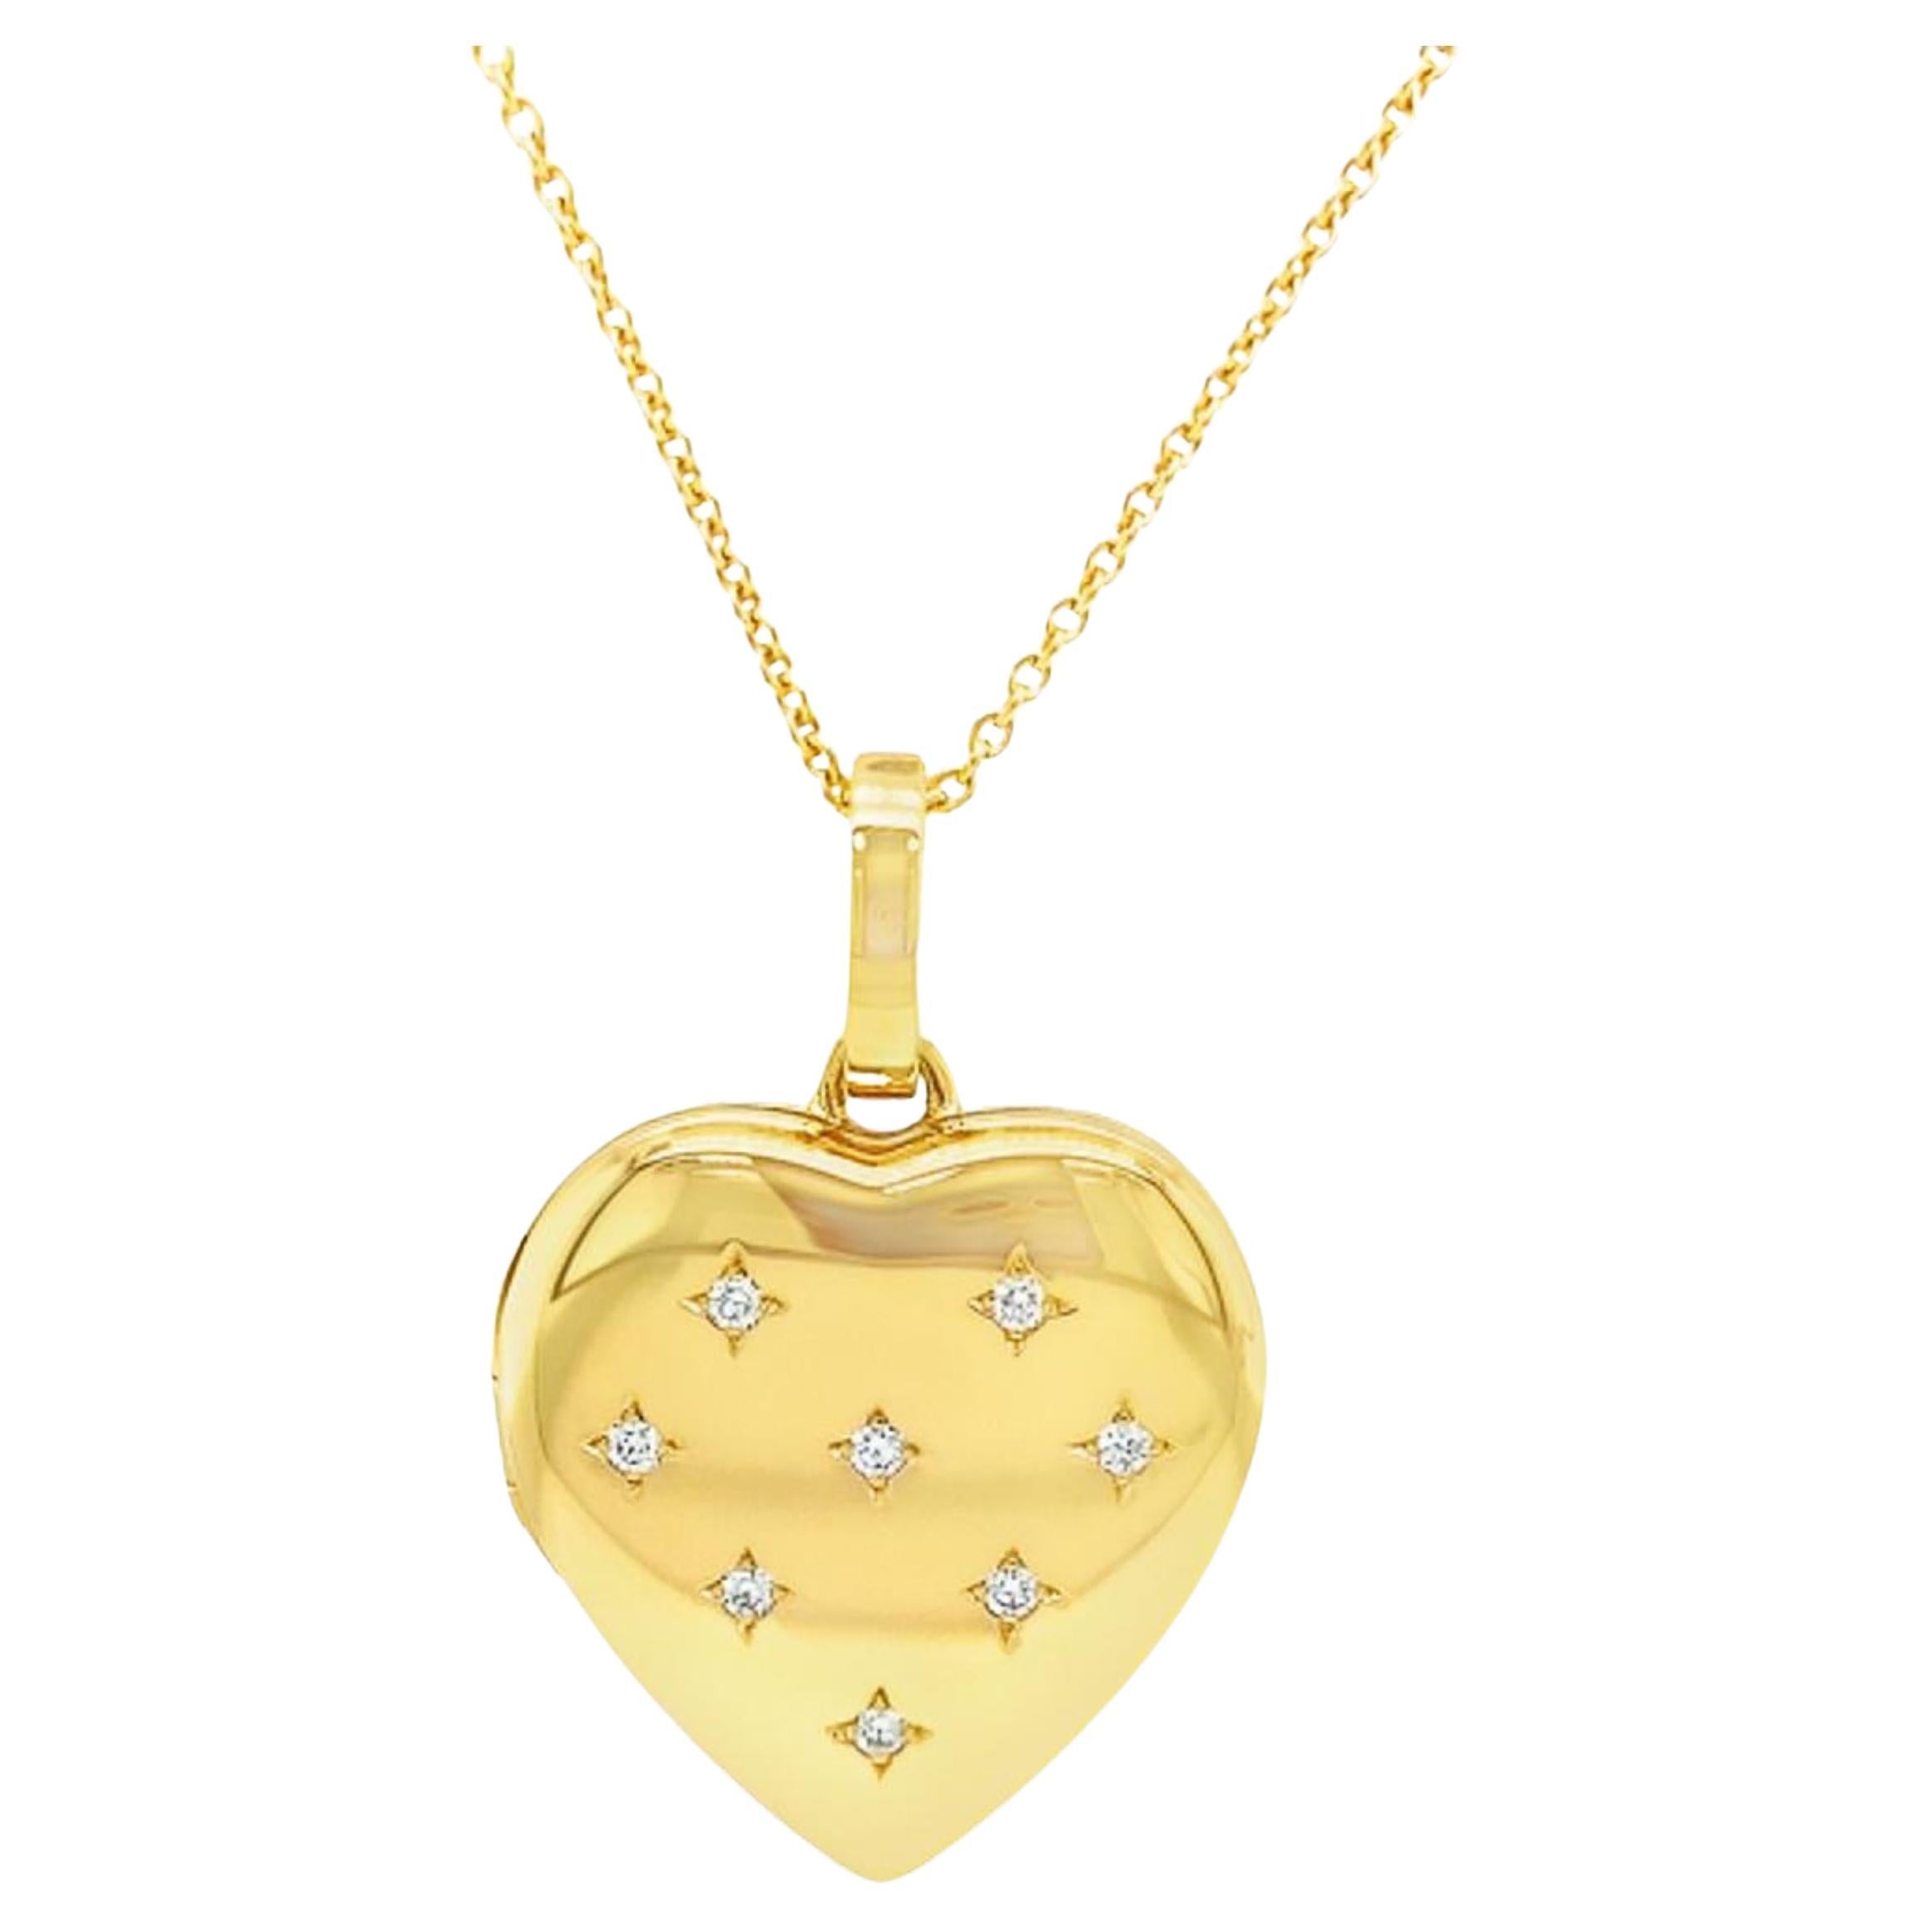 Heart Shaped Locket Pendant Necklace, 18k Yellow Gold, 8 Diamonds 0.16ct